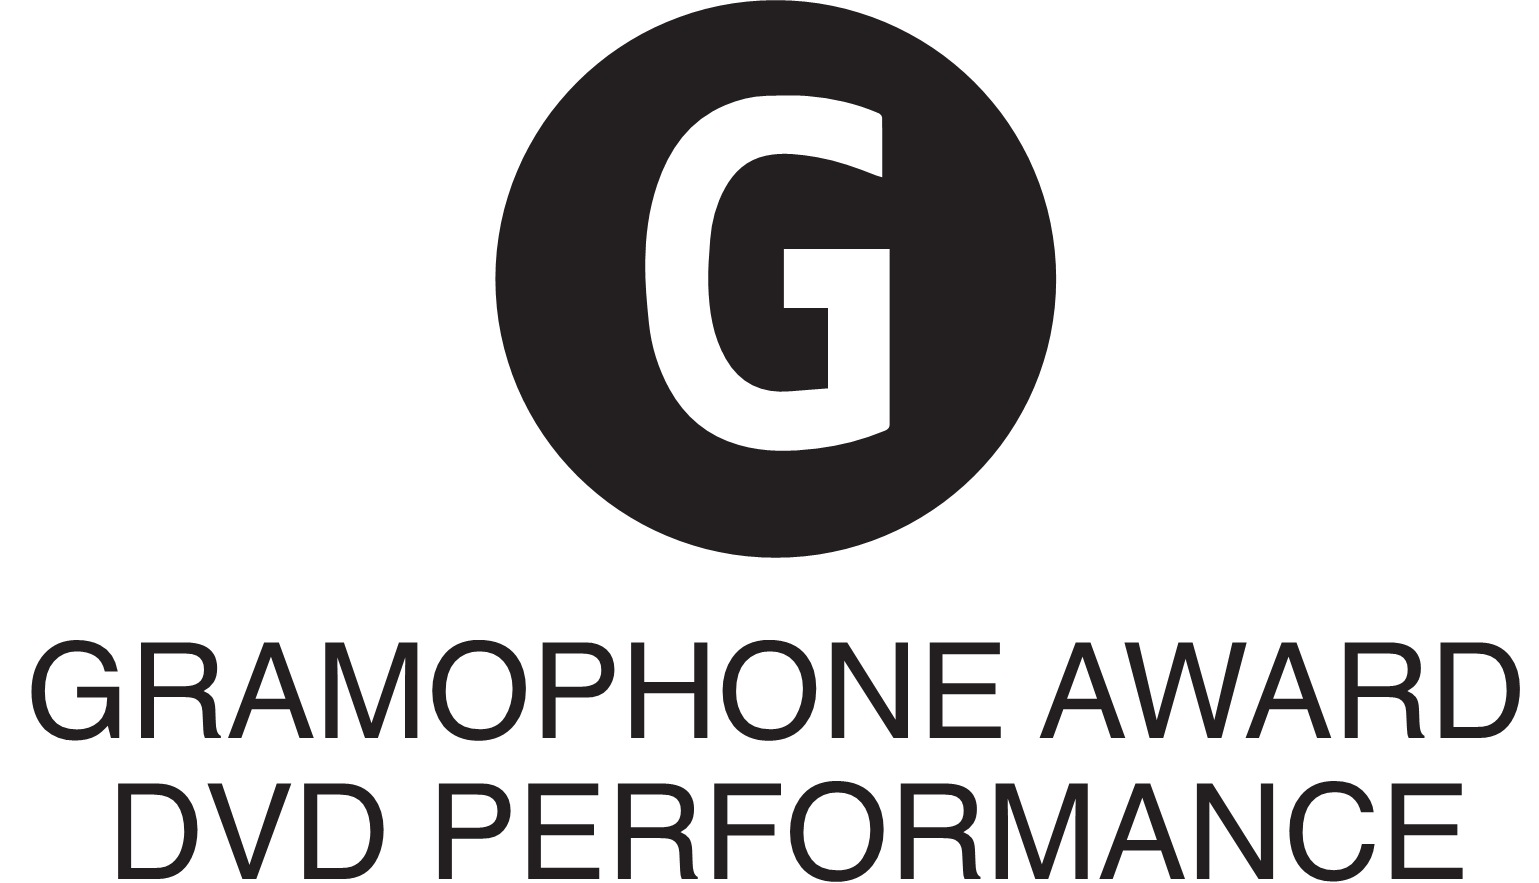 Gramophone Award: 'DVD Performance' (2011)